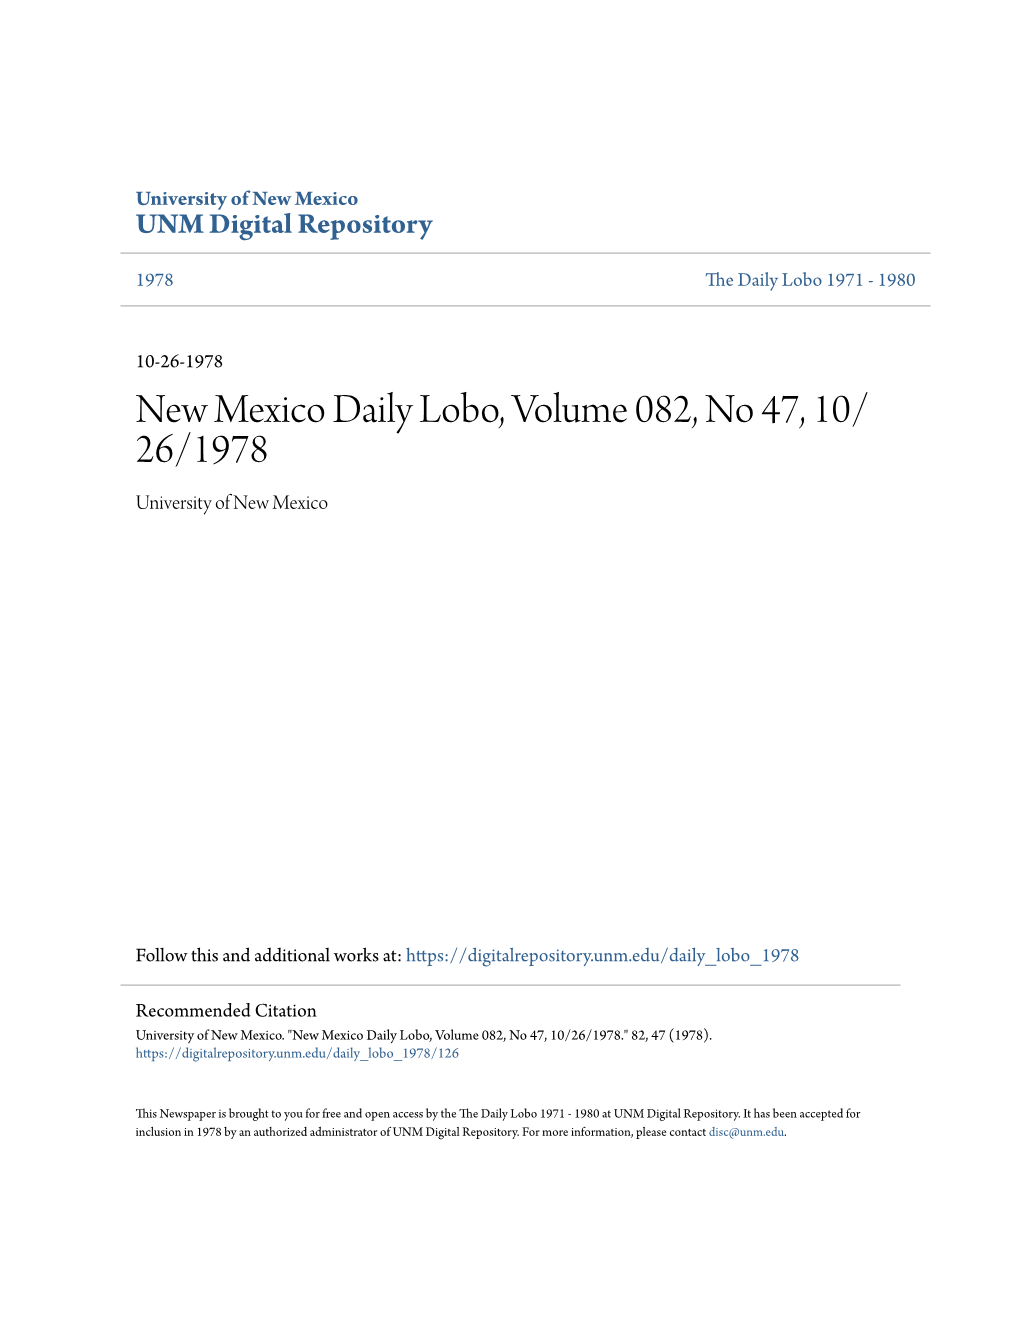 New Mexico Daily Lobo, Volume 082, No 47, 10/26/1978." 82, 47 (1978)